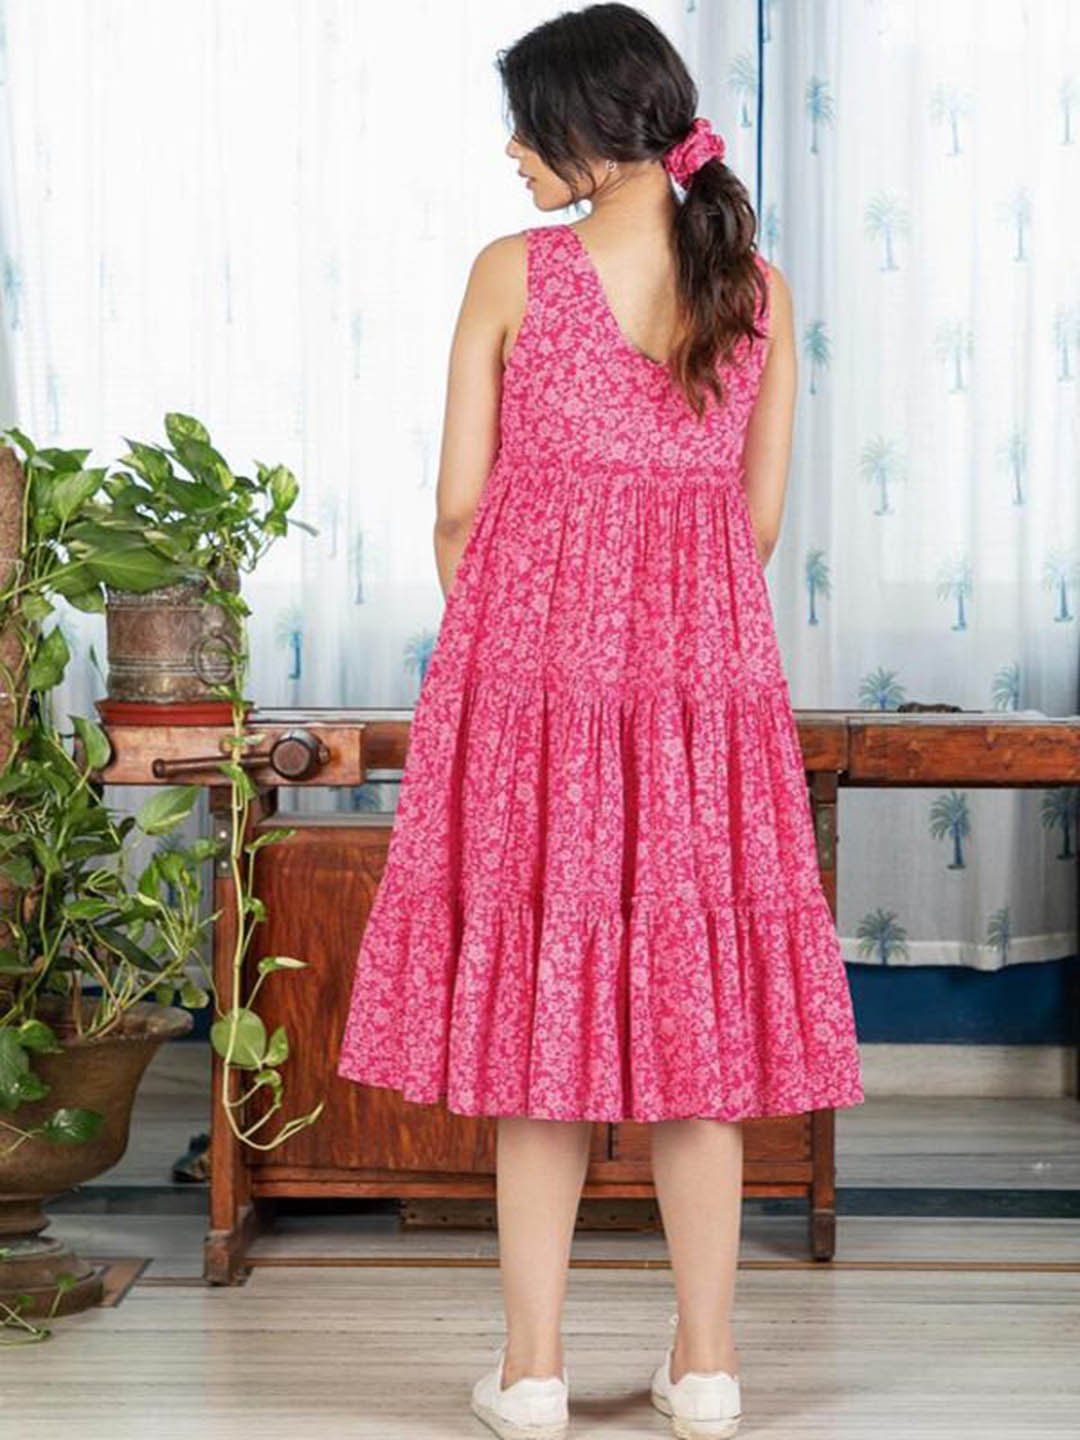 Printed-Pink-Cotton-Dress